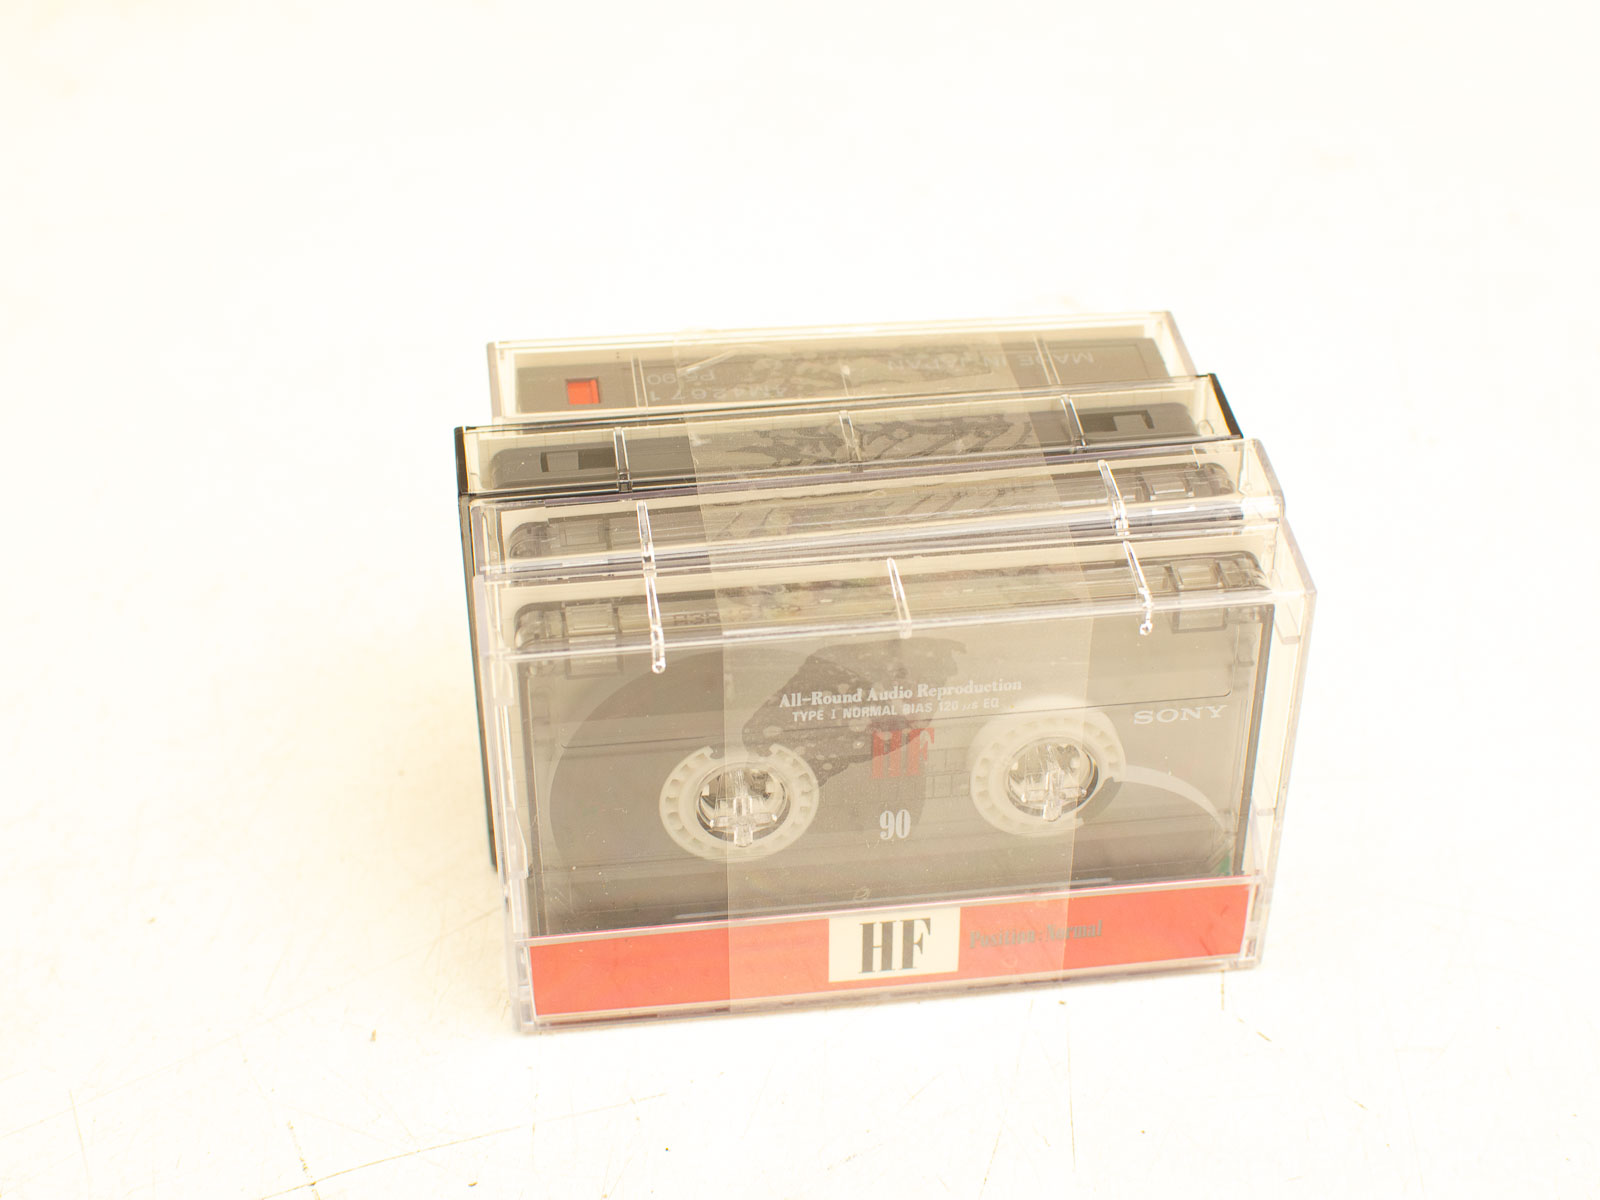 4 sony cassettebandjes  31905